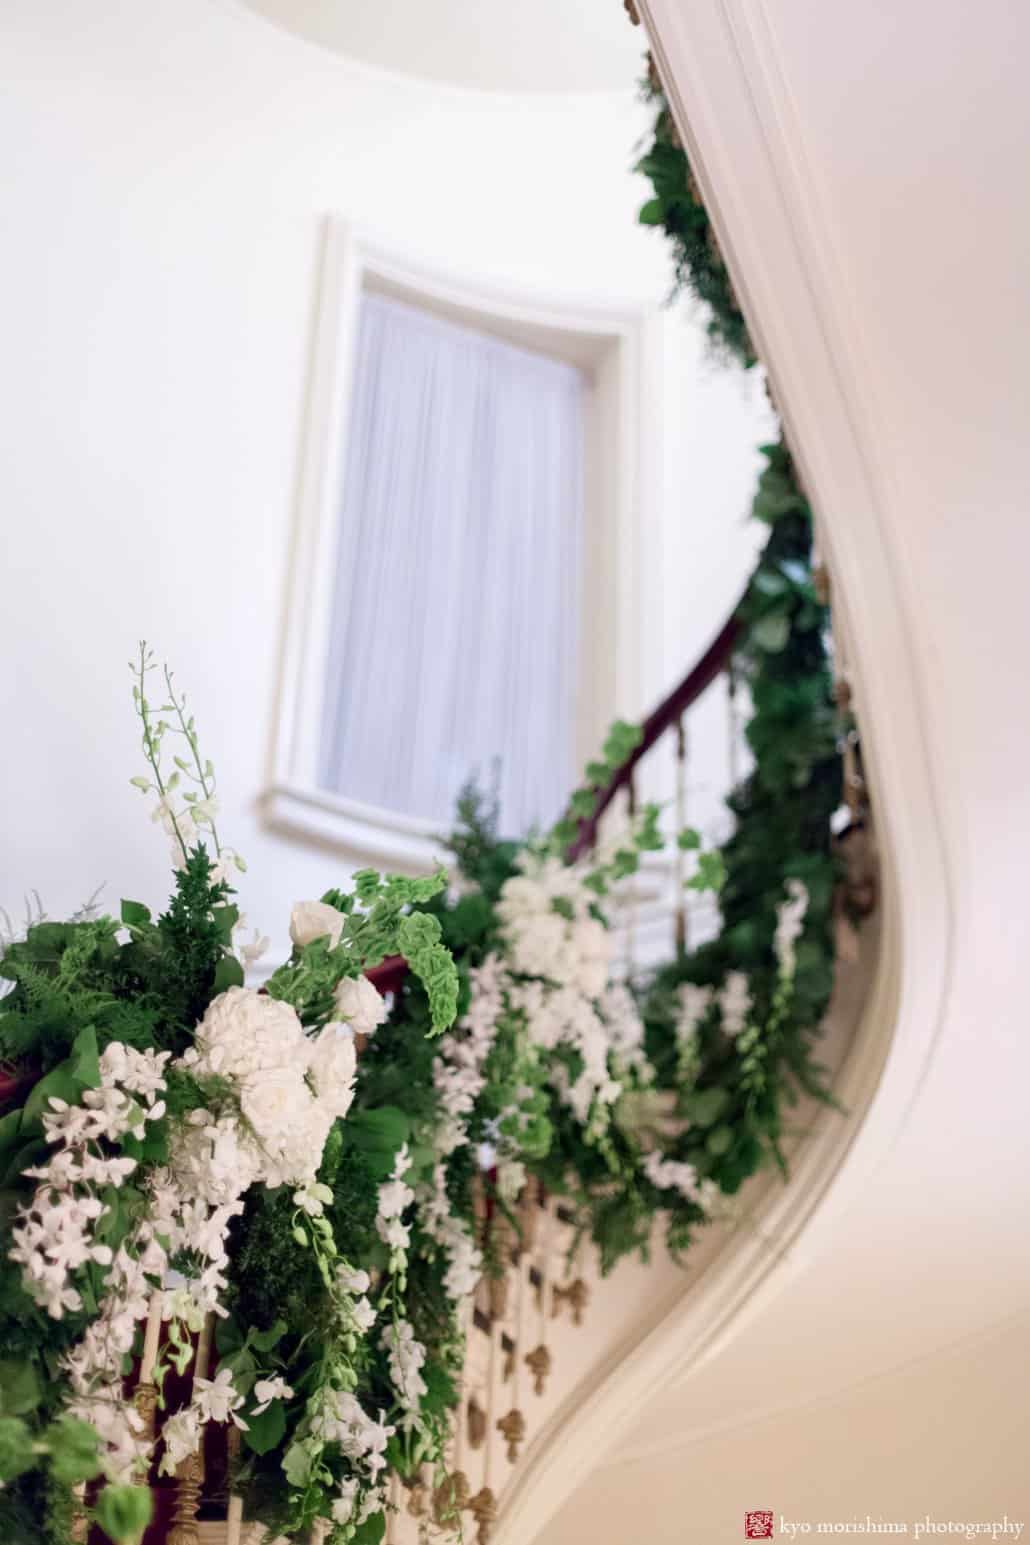 Franz James wedding flower decor on the Lotos Club spiral staircase photographed by Lotos Club wedding photographer Kyo Morishima